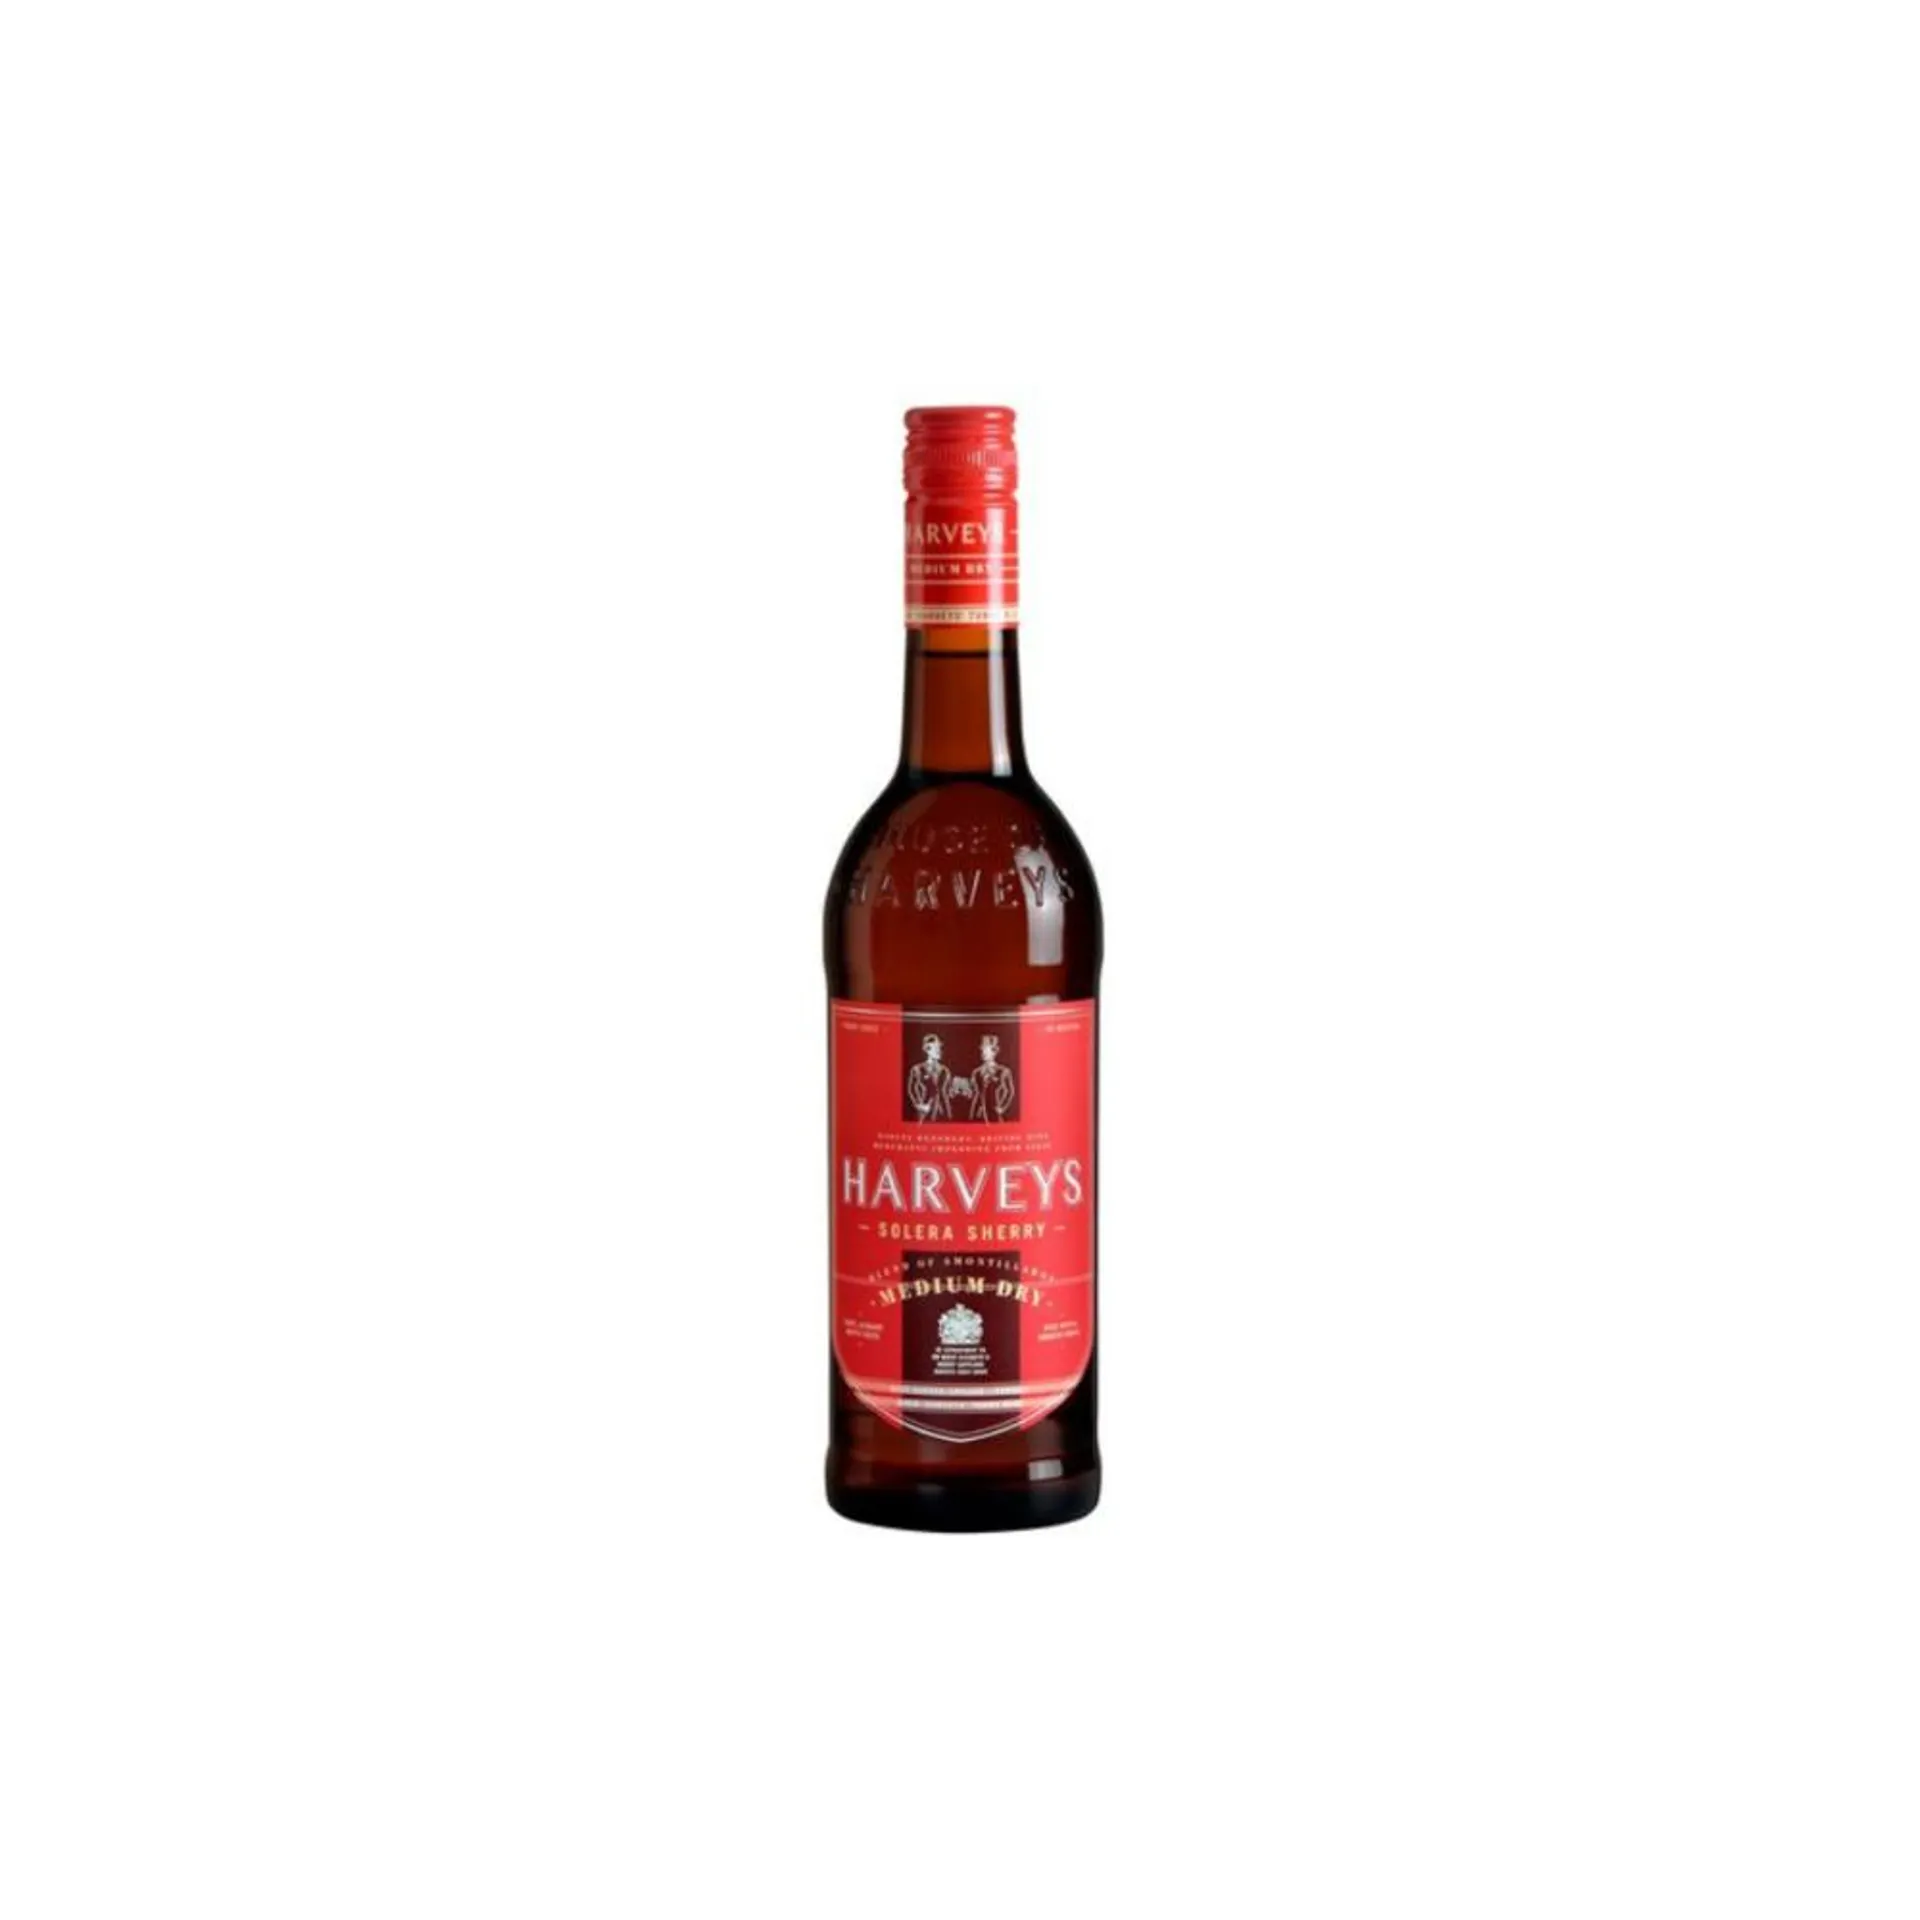 Harveys Medium Dry Amontillado Sherry - Spain